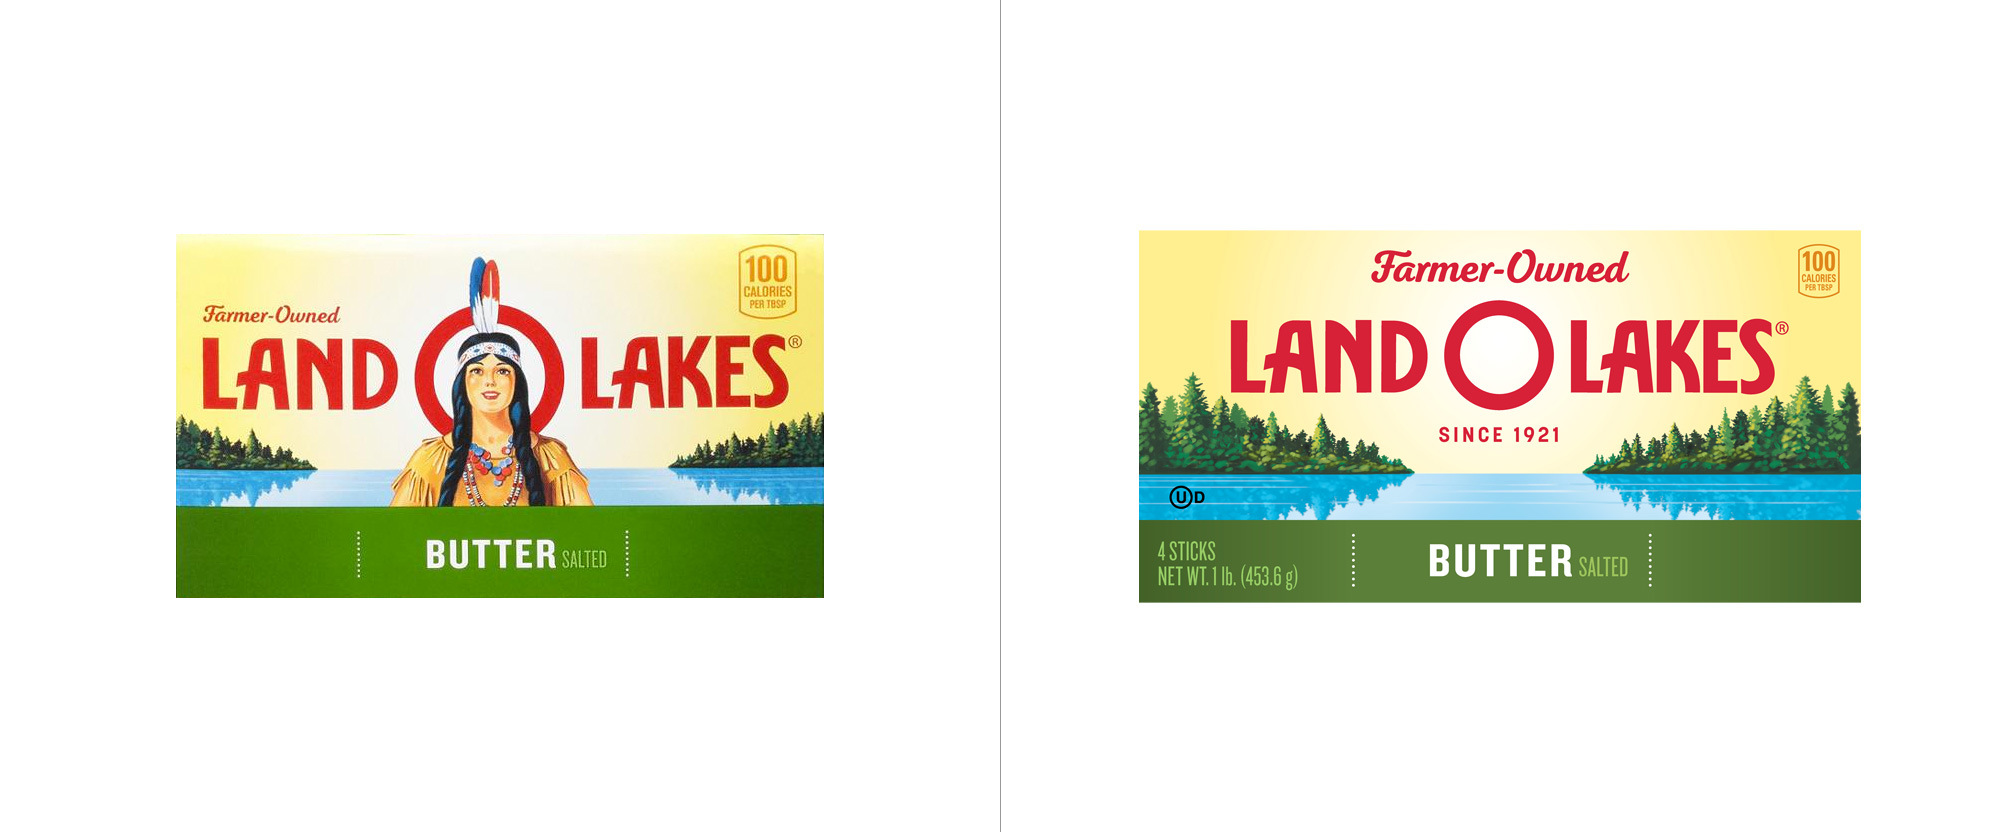 More Lake for Land O'Lakes